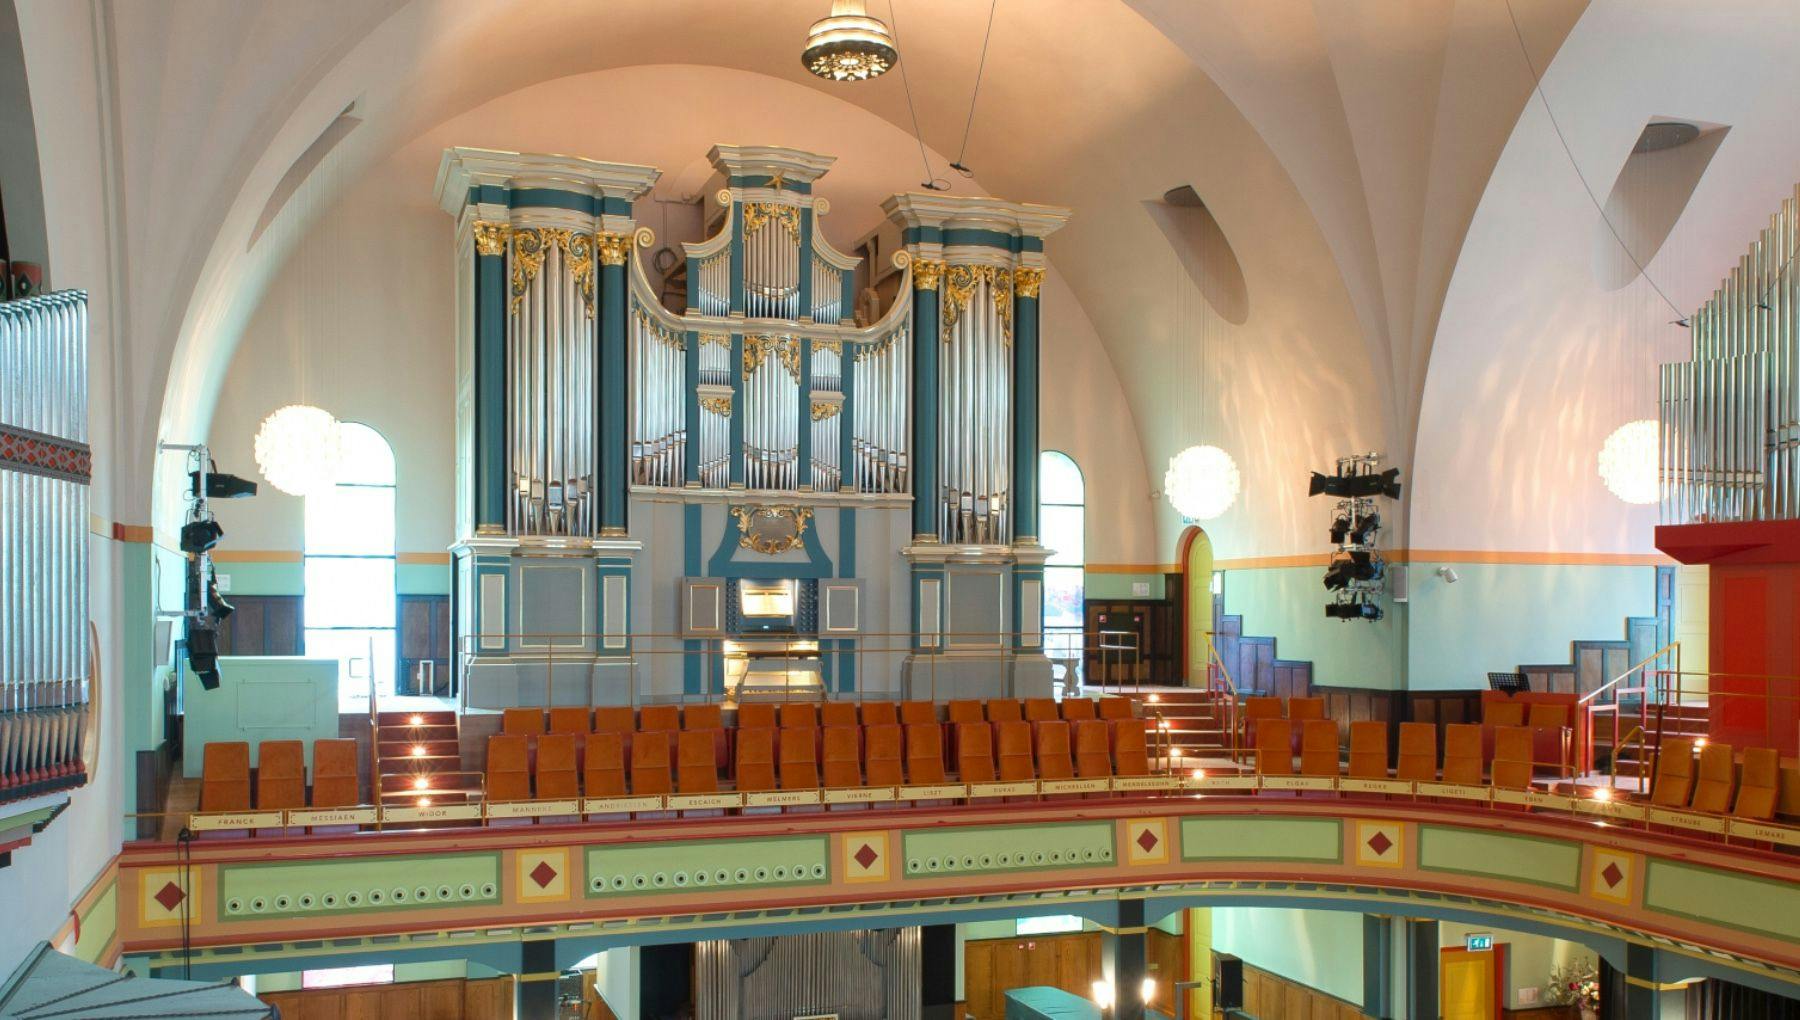 Orgelpark music hall